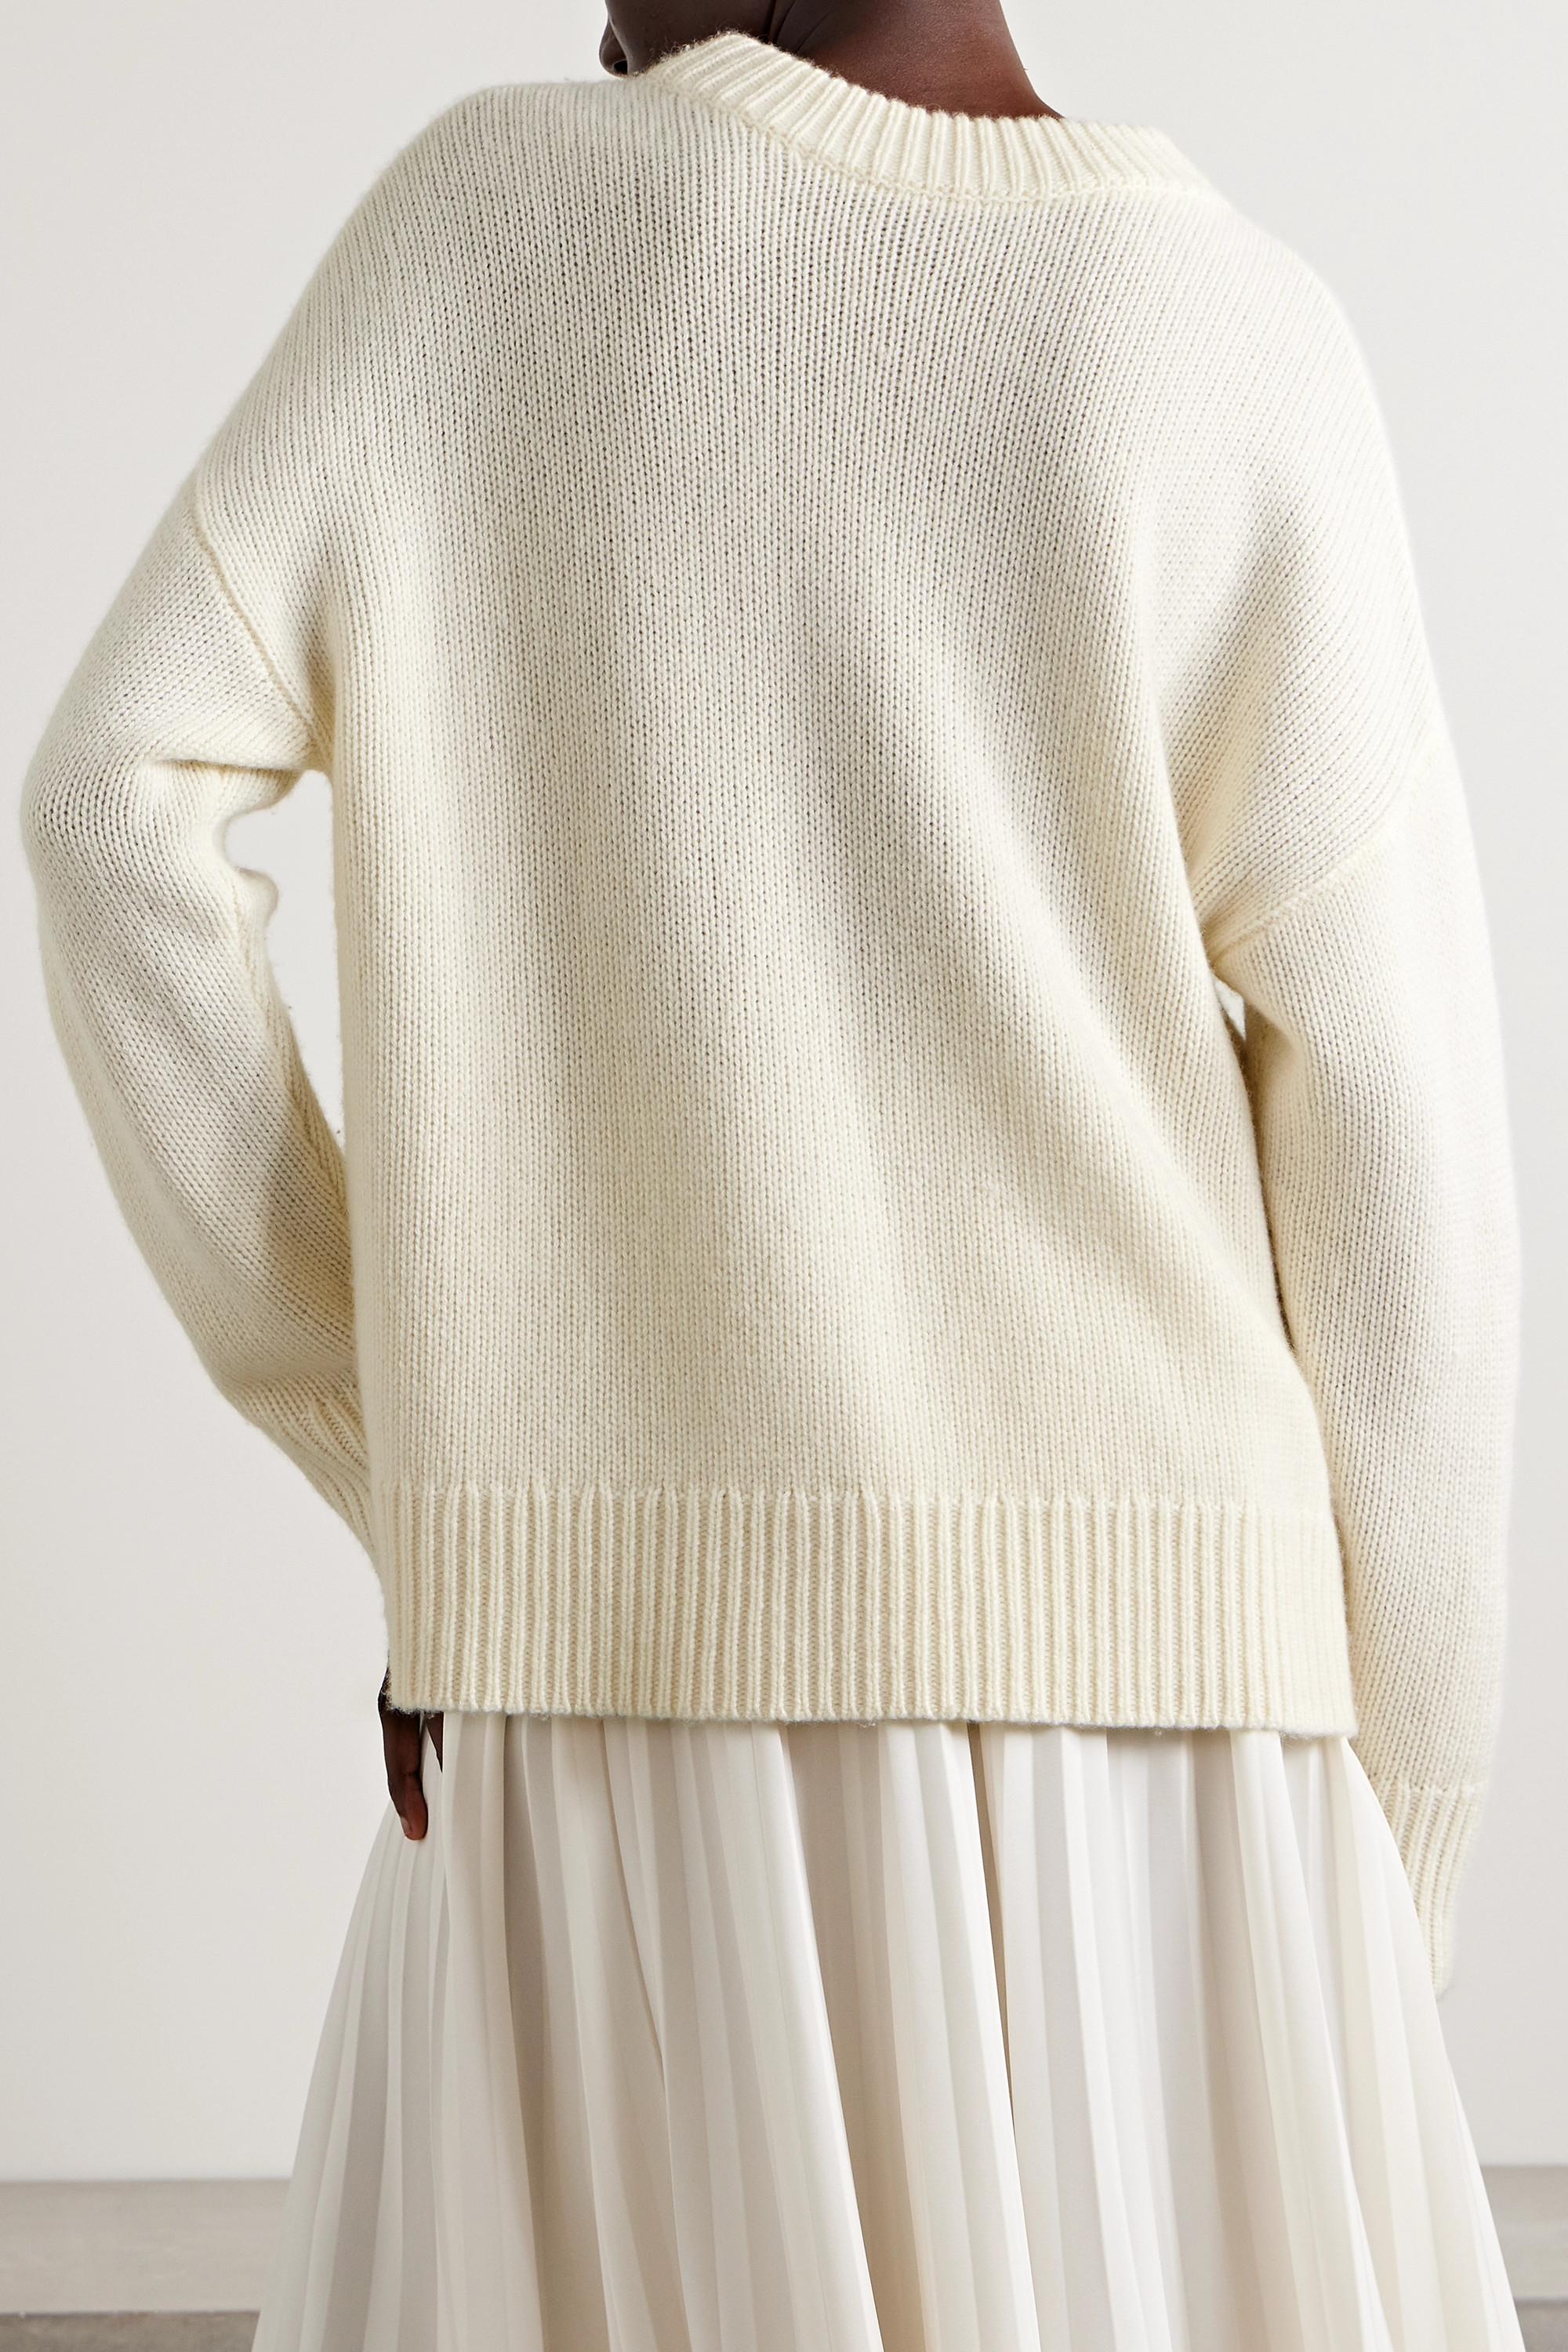 Co. Cashmere Sweater in Natural | Lyst Australia